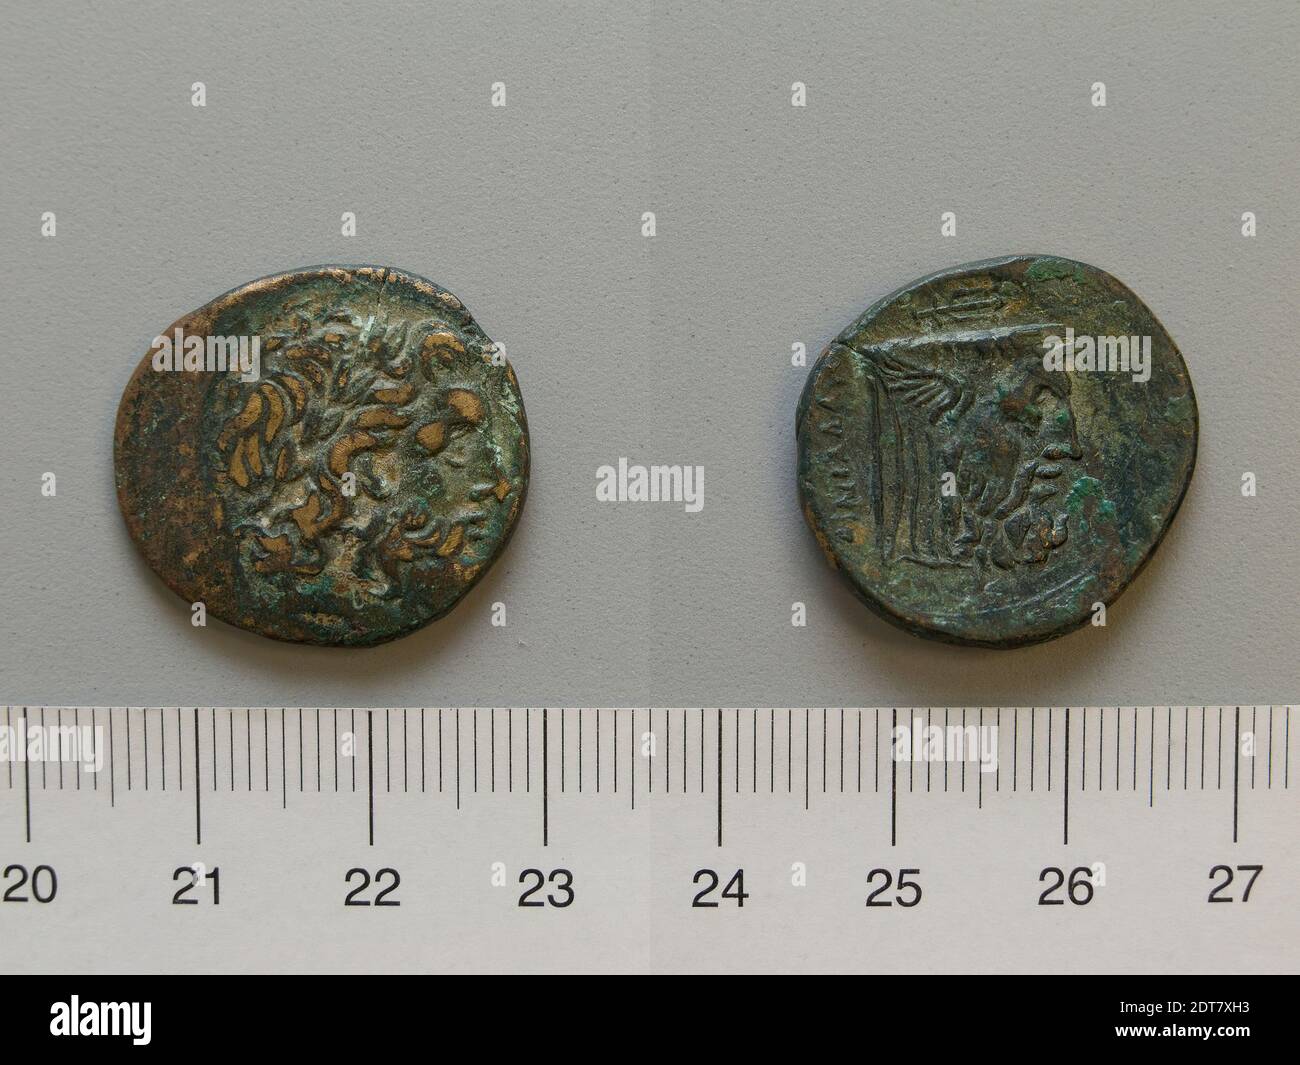 Mint: Oiniadai, Coin from Oiniadai, 219–211 B.C., Copper, 6.99 g, 1:00, 23.5 mm, Made in Oiniadai, Greek, 3rd century B.C., Numismatics Stock Photo